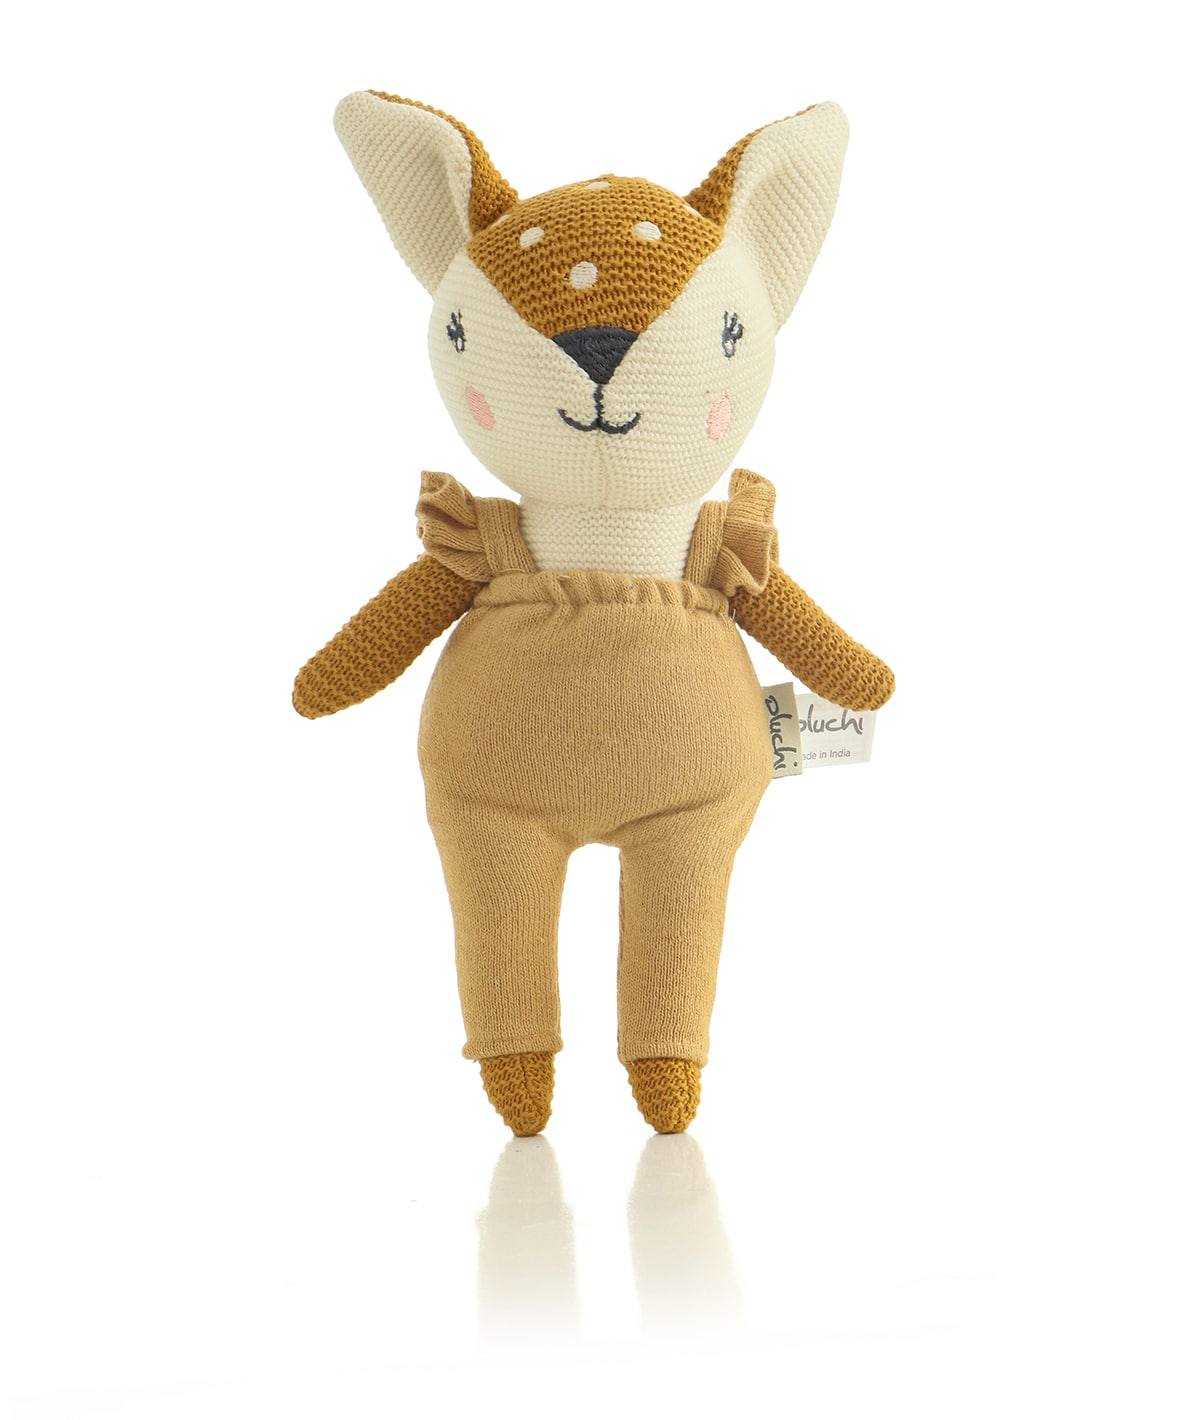 Classy Fox- Cotton Knitted Stuffed Soft Toy (Mustard & Ivory